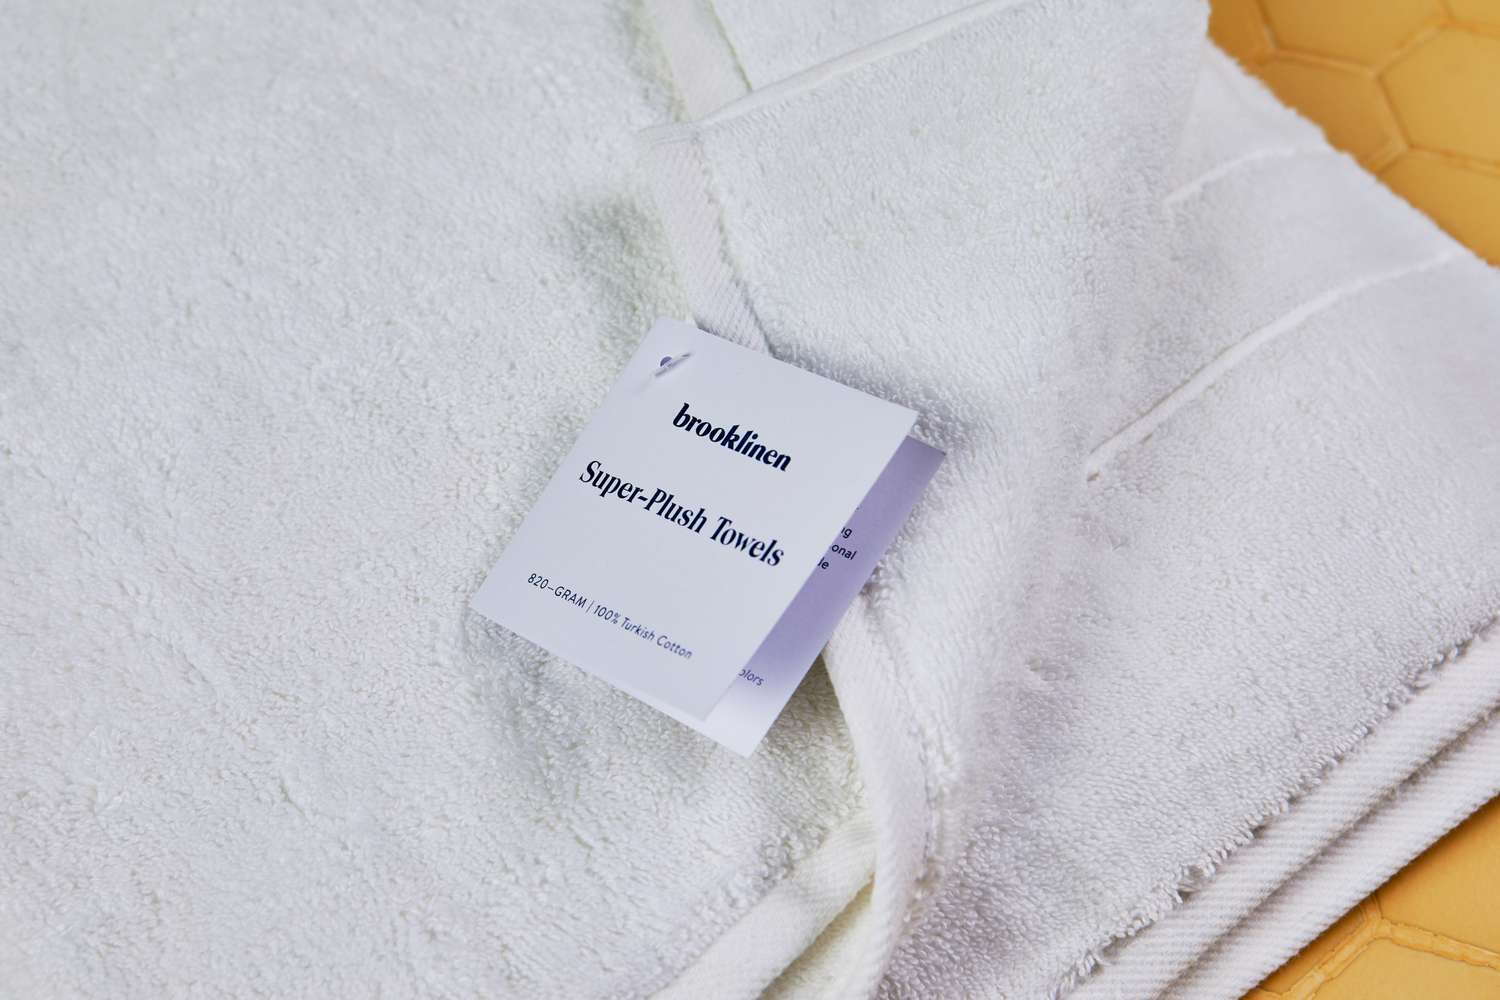 Brooklinen Super-Plush Bath Towel edge and tag